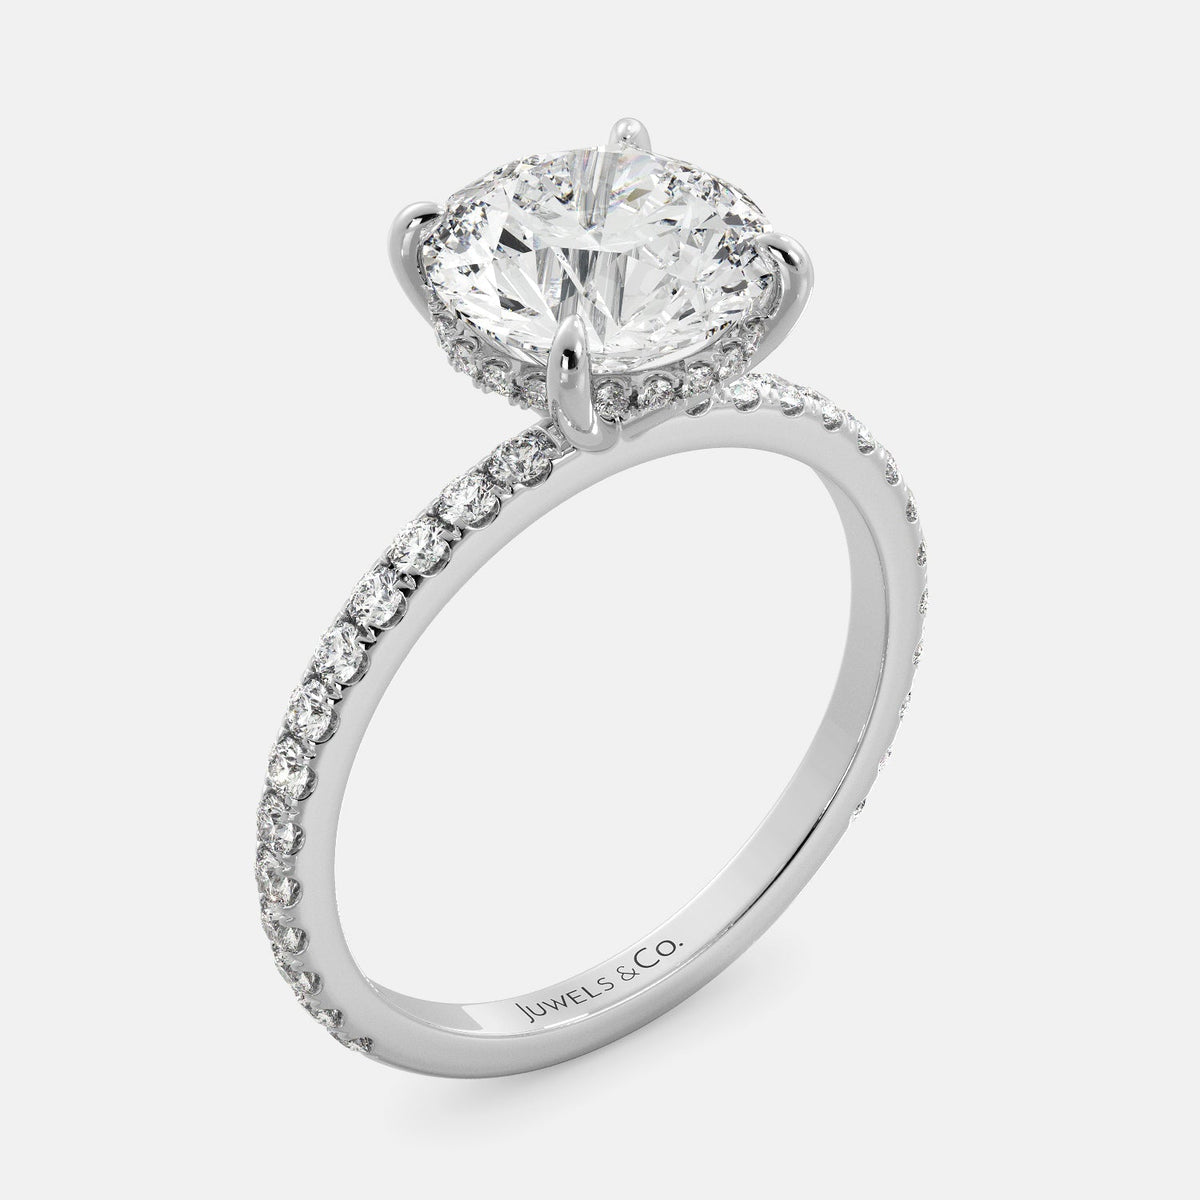 Lab-grown Round Cut Diamond with Pave Ring, 2-carat, white gold 14K